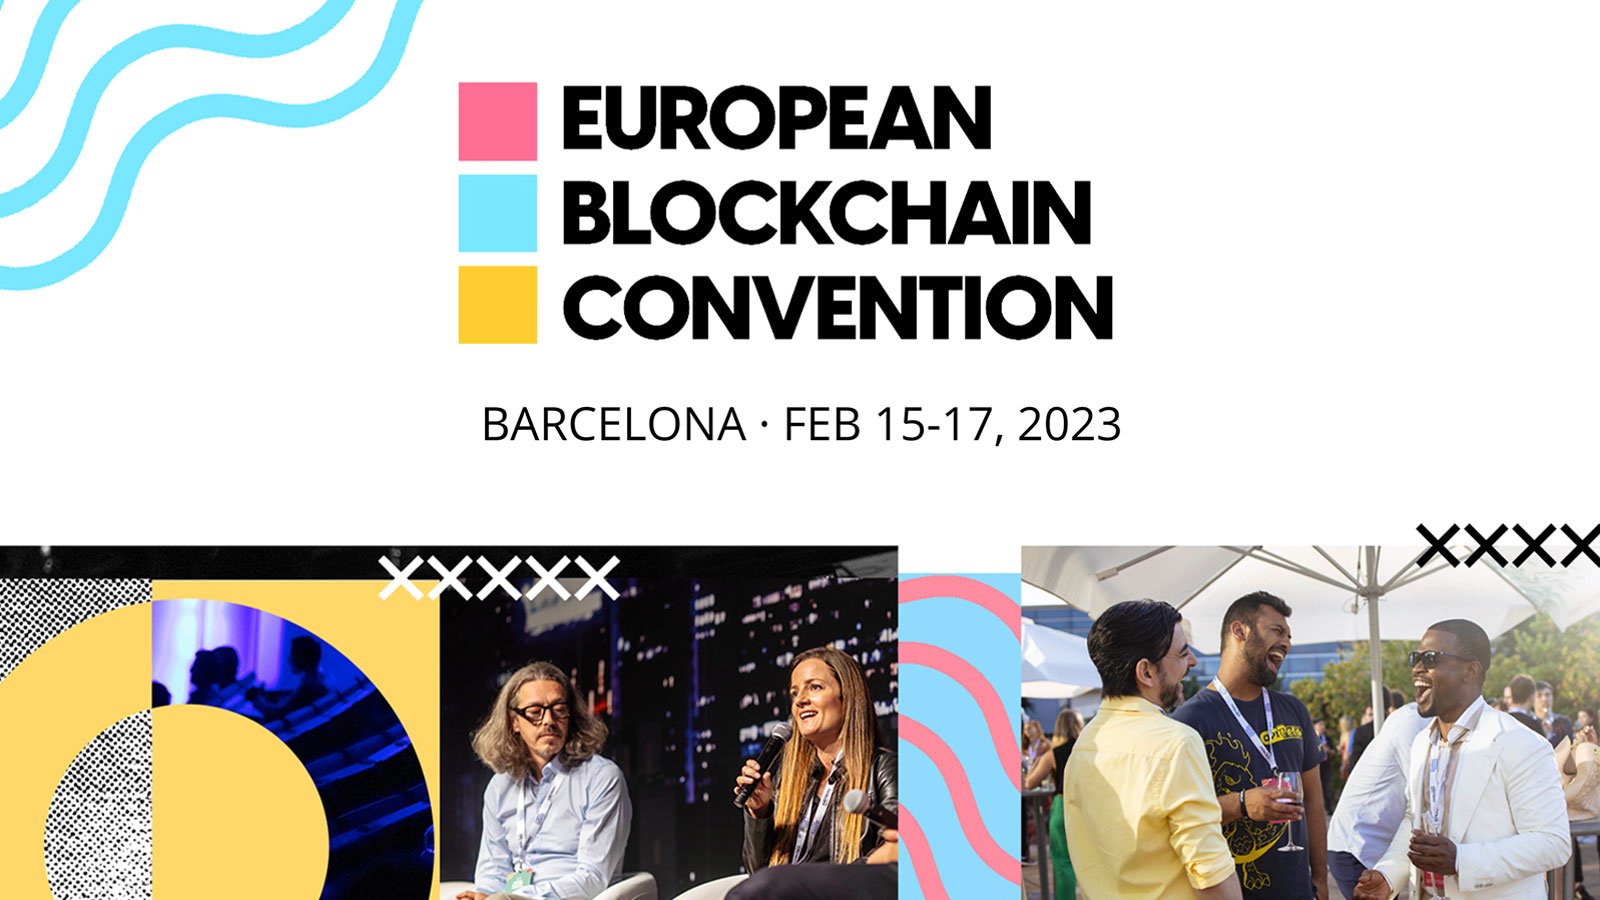 European Blockchain Convention 2023: Europe’s Most Influential Blockchain & Crypto Event Returns to Barcelona